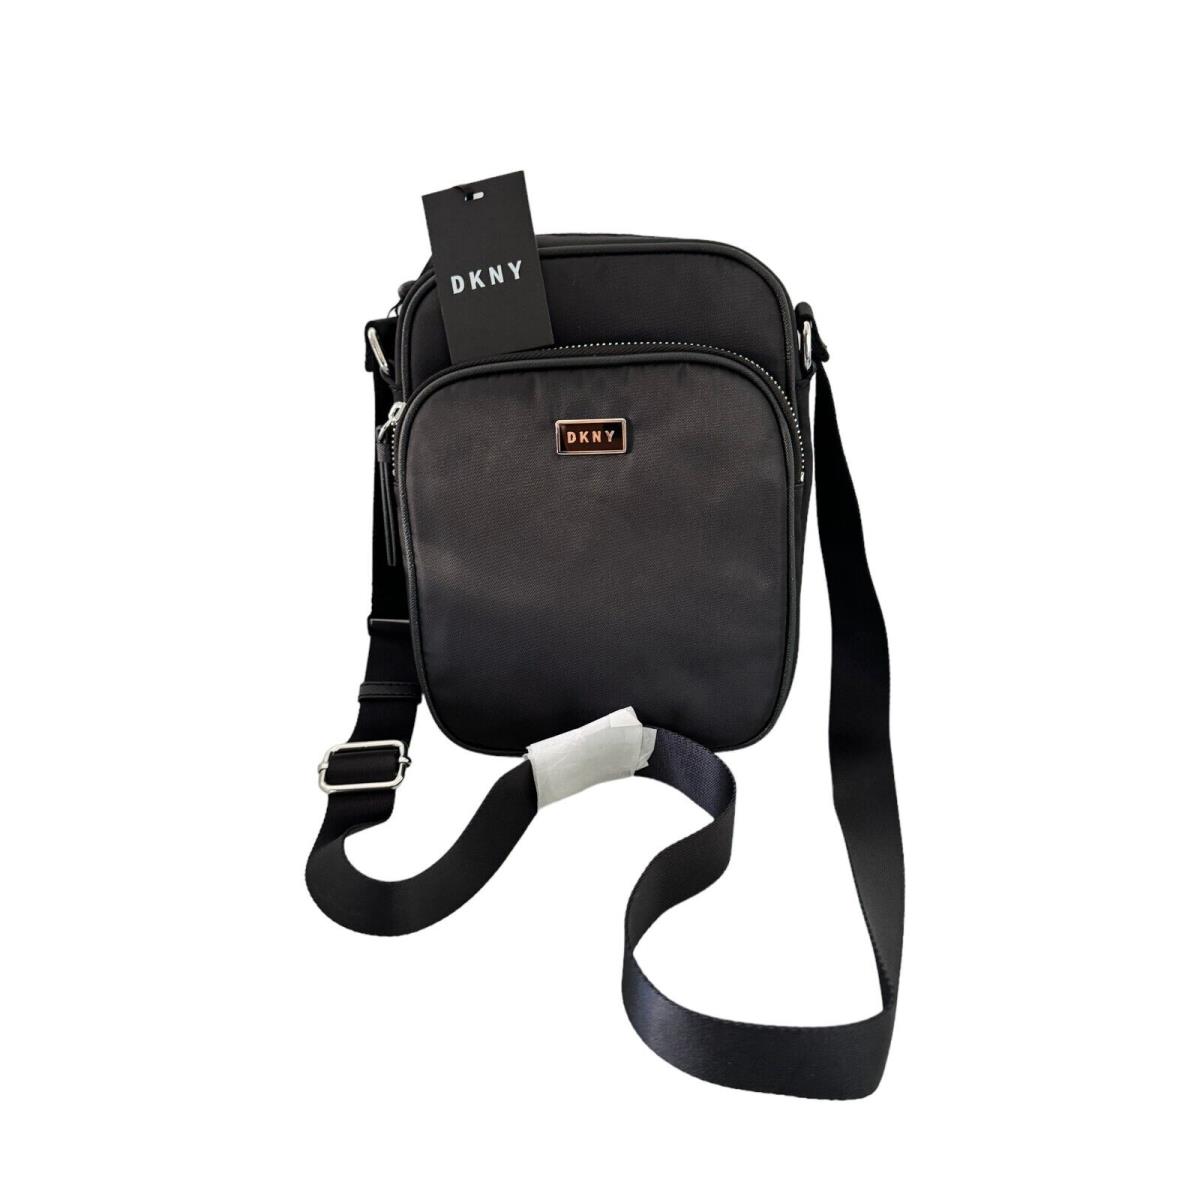 Dkny Women`s Gigi Crossbody Small Bag Handbag Purse Black/silver - Handle/Strap: Black, Hardware: Black, Exterior: Black/silver